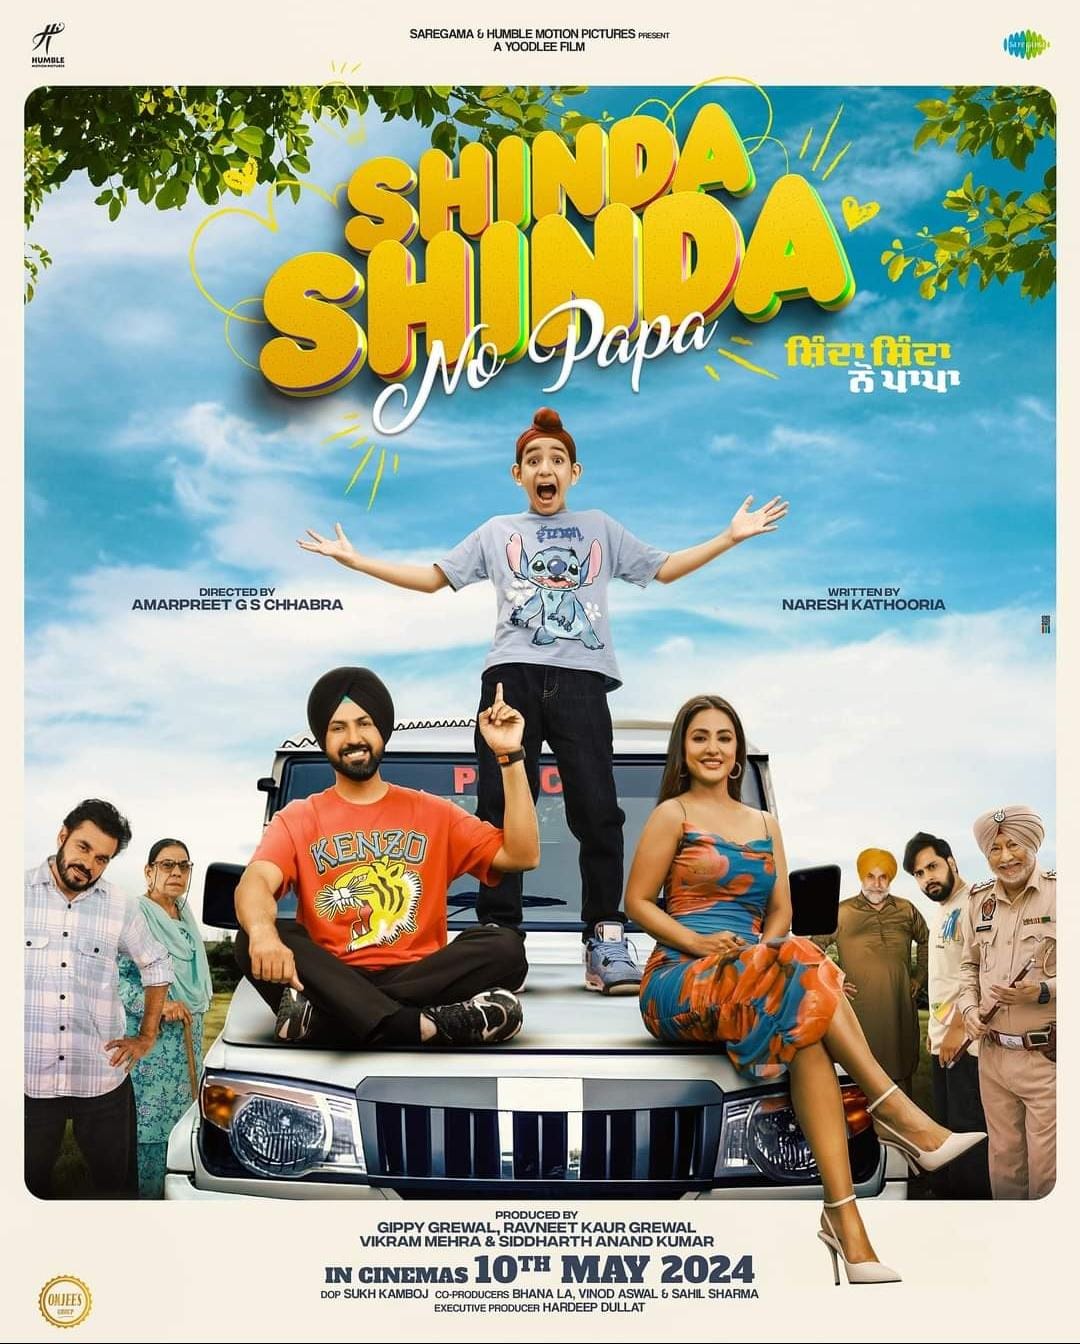 Shinda Shinda No Papa Movie Release In Cinemas On 10th May 2024